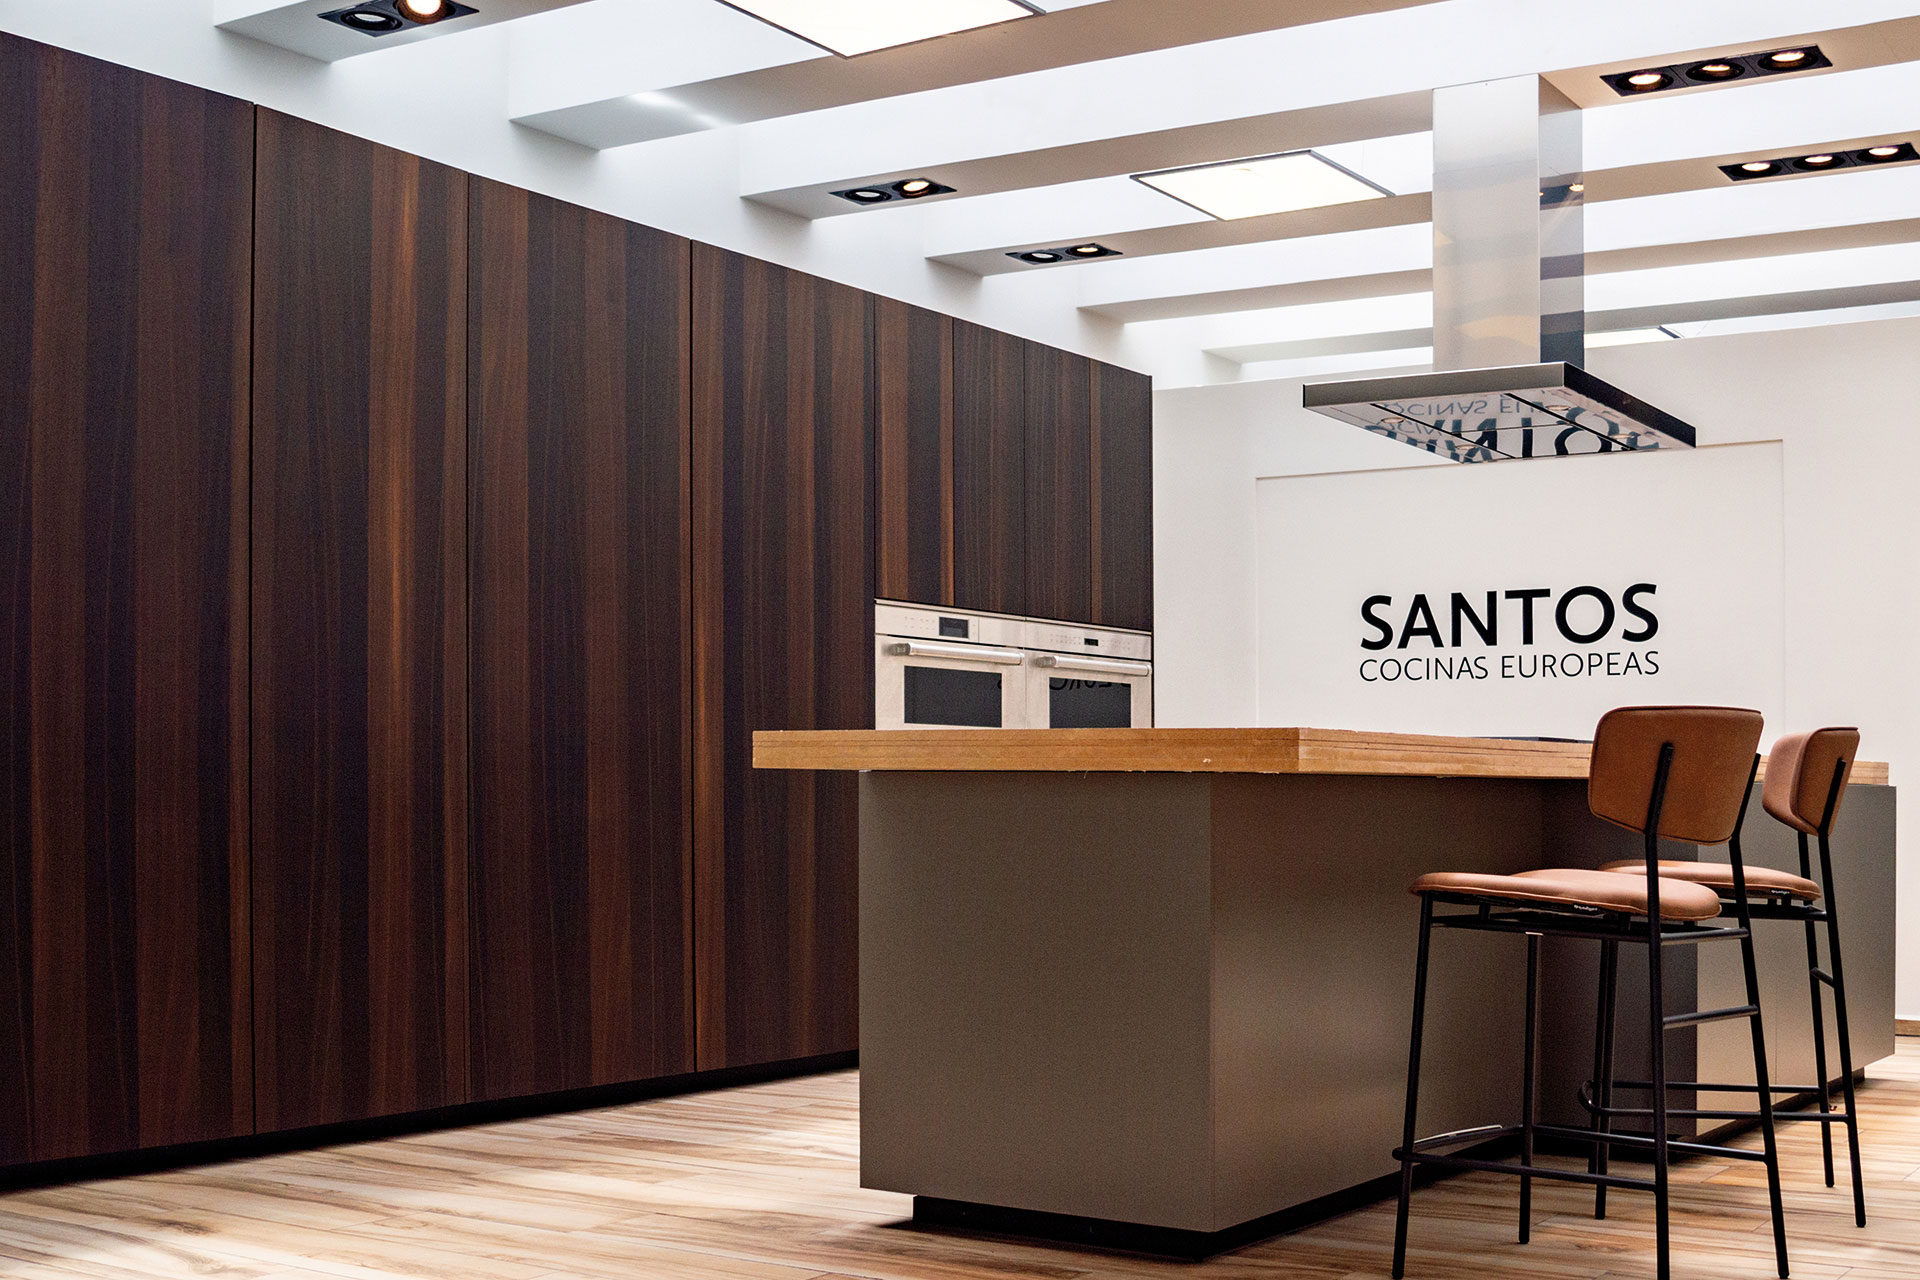 Santos Guadalajara, the new and exclusive Santos kitchen showroom in Mexico